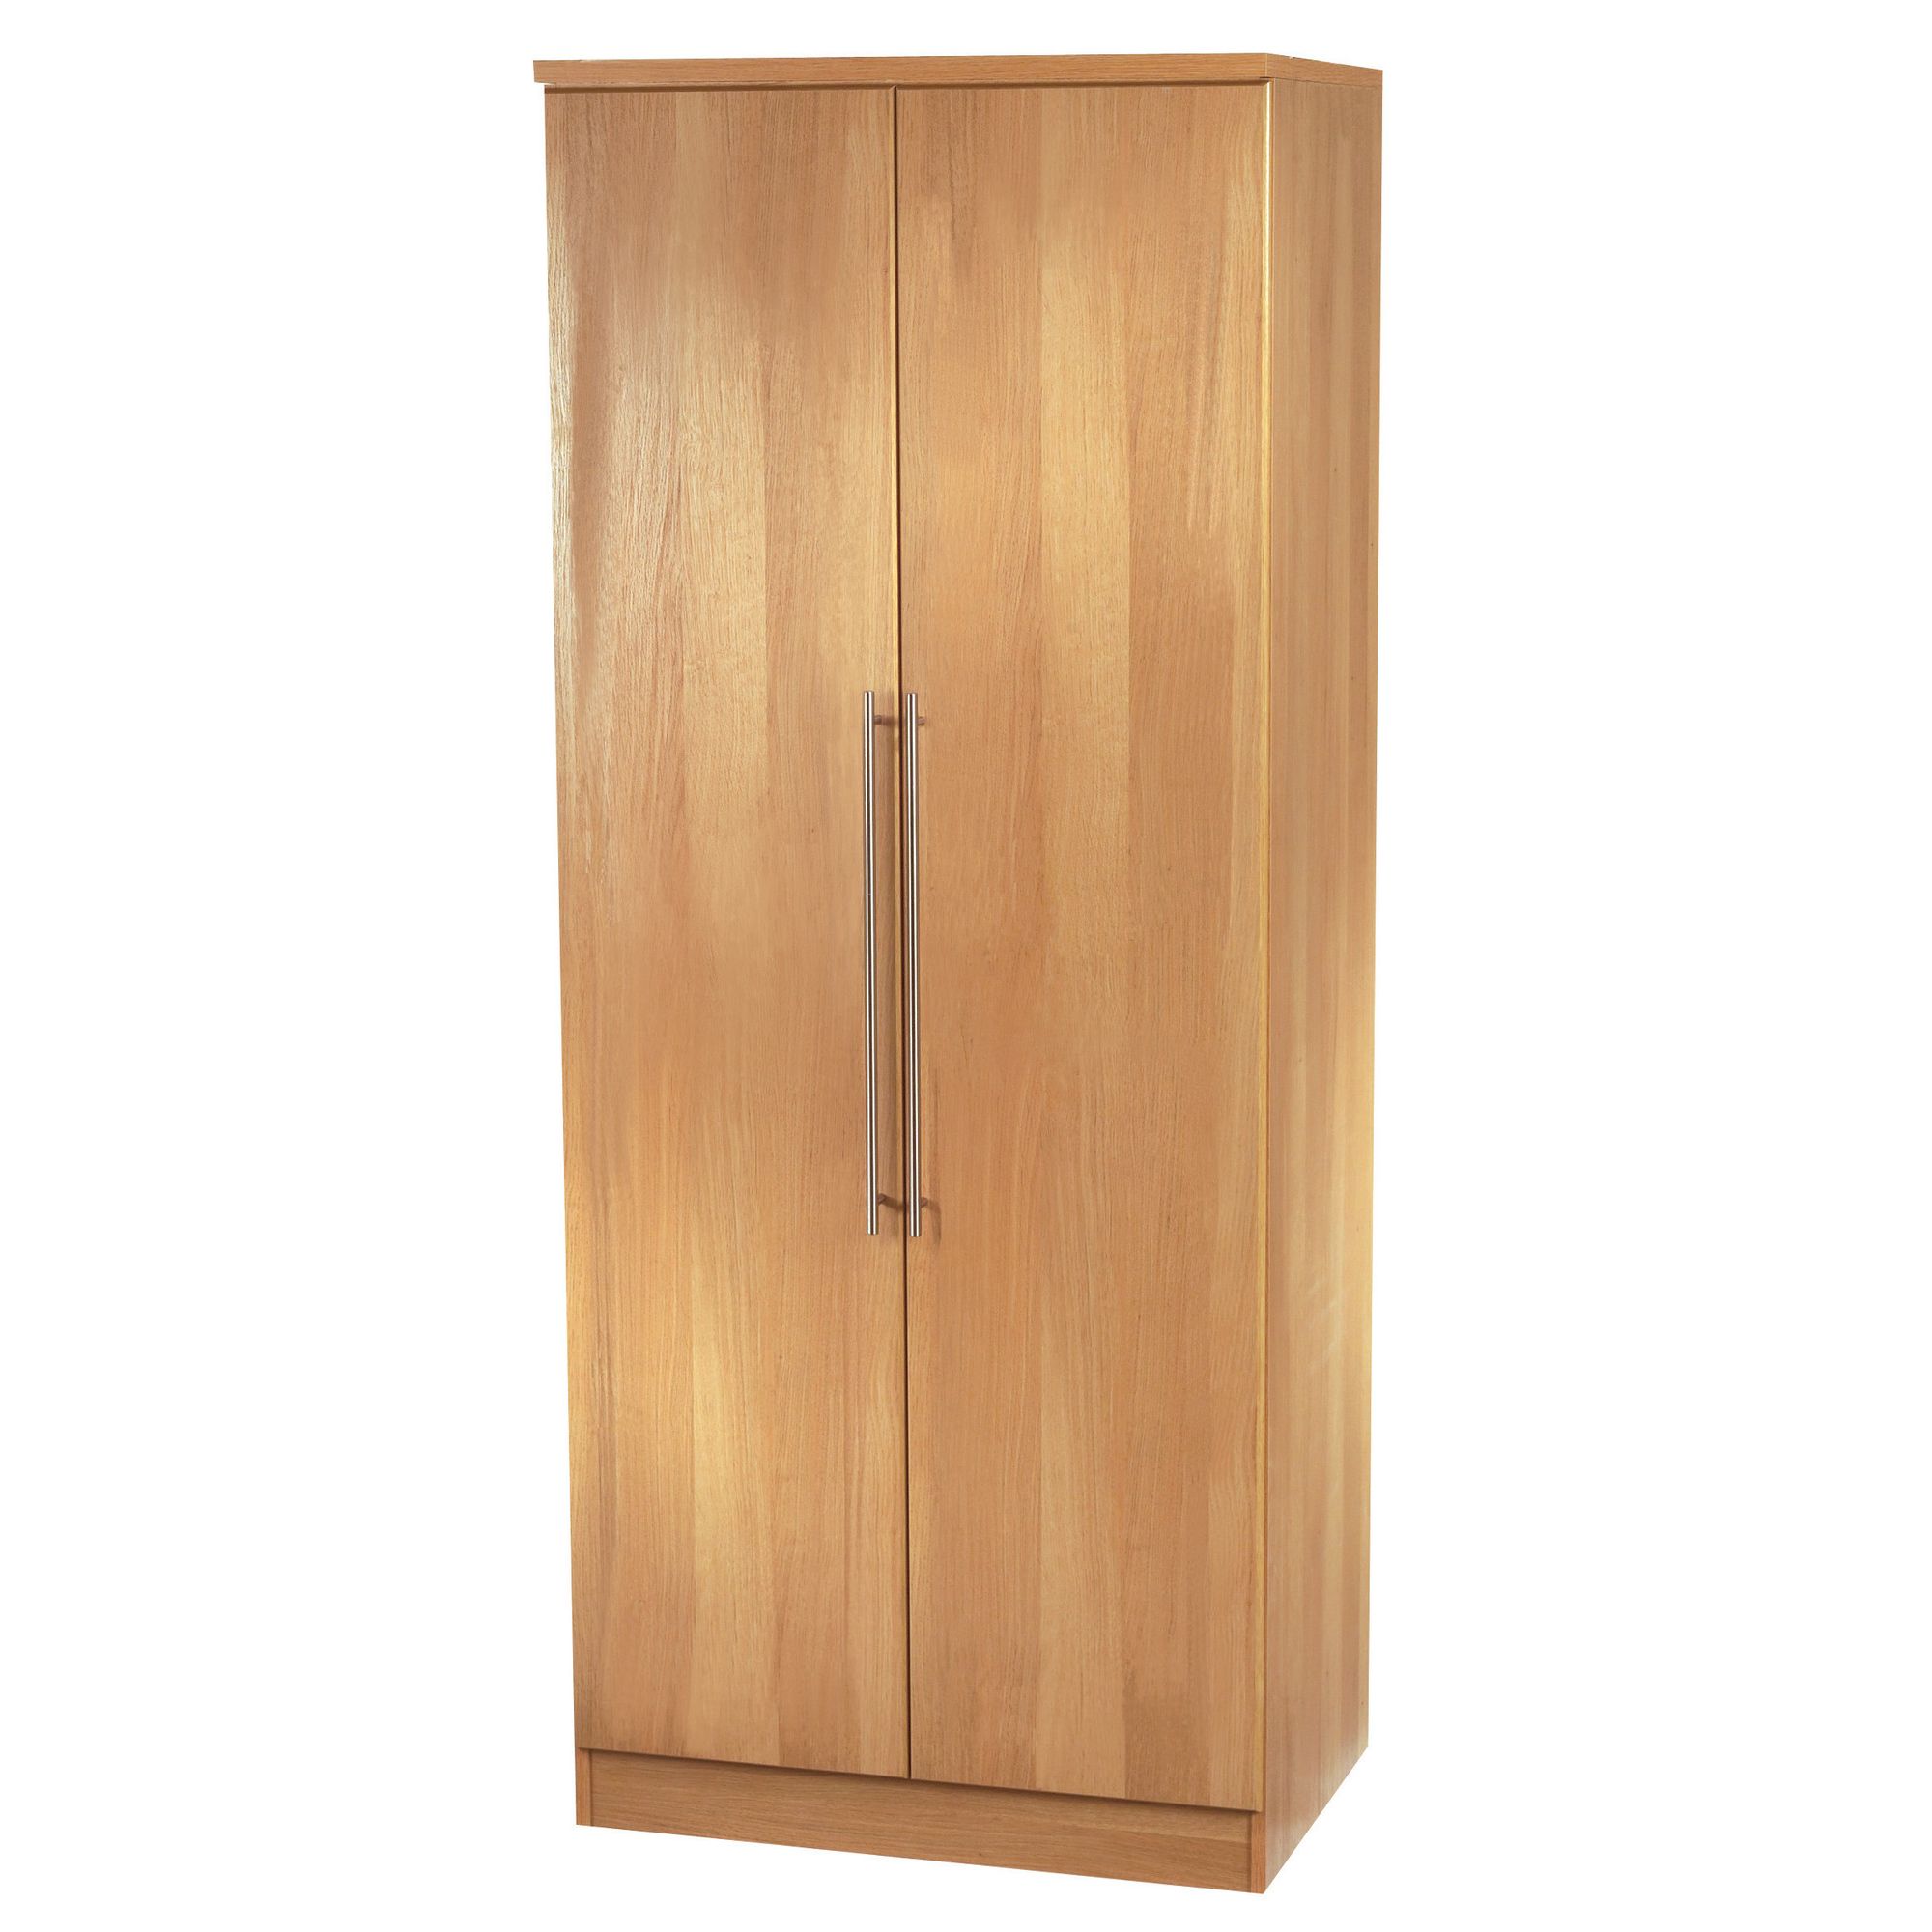 Welcome Furniture Sherwood 76.2 cm Plain Midi Wardrobe - Maple at Tesco Direct